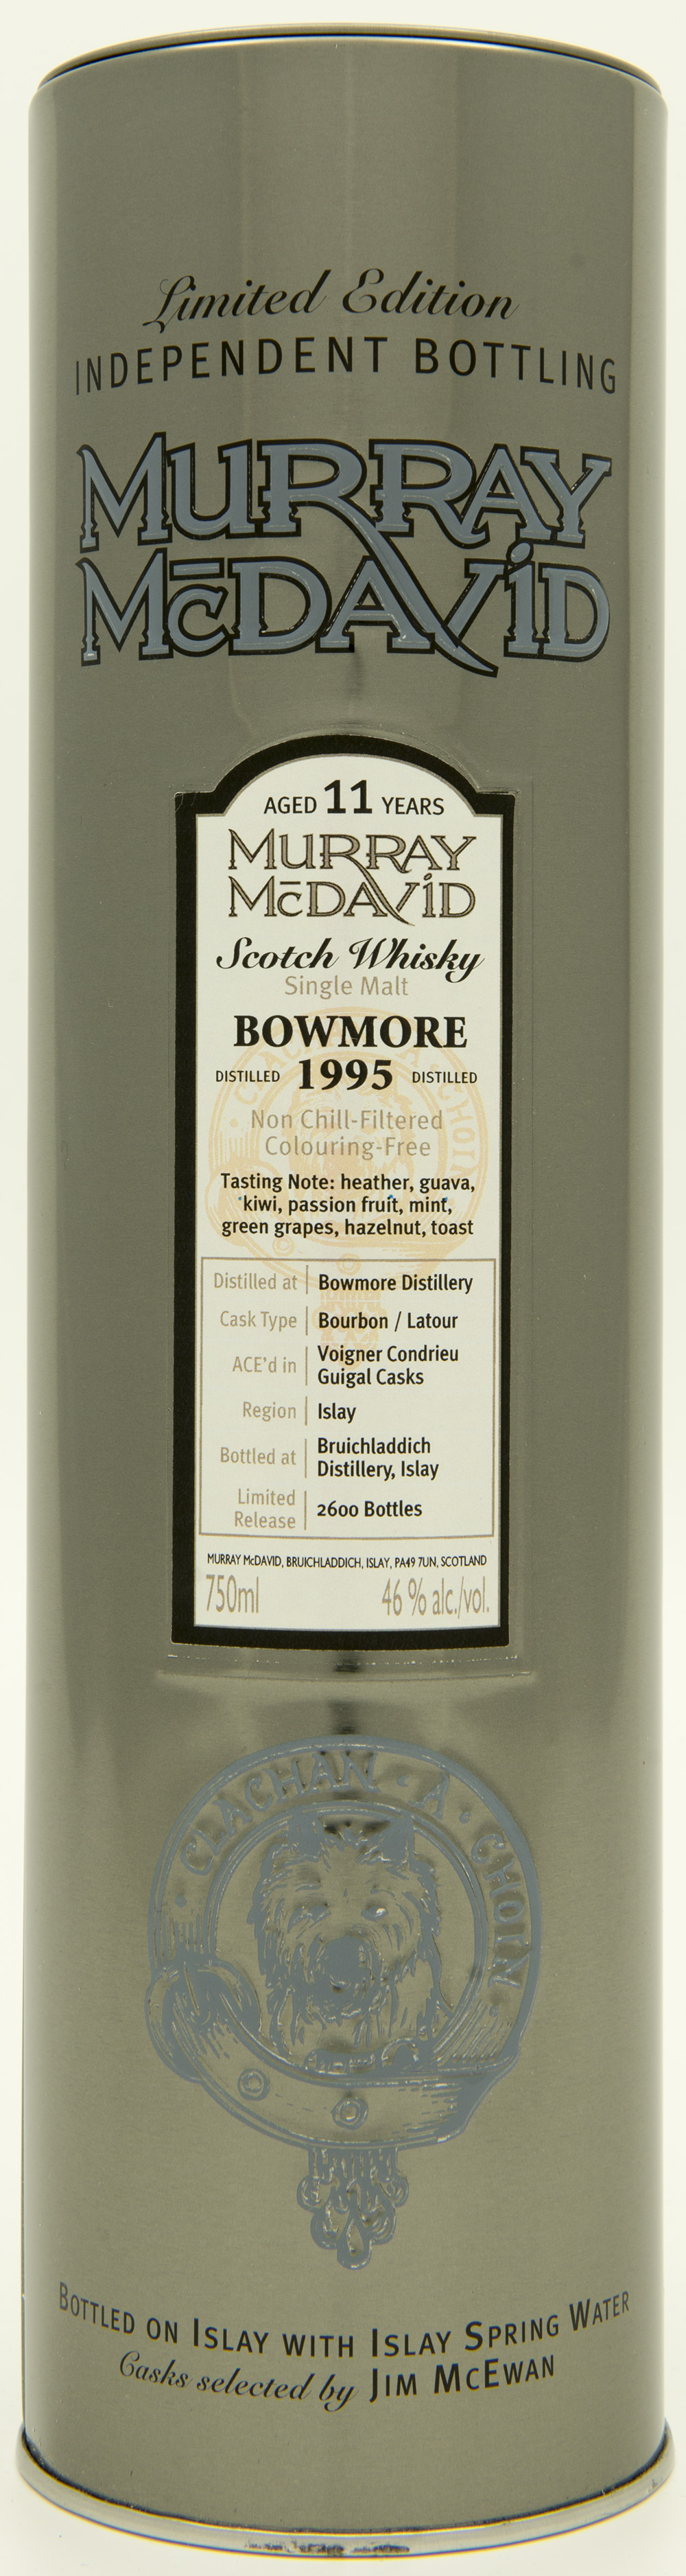 Billede: DSC_6568 Murray McDavid Bowmore 11 years 1995 - tube front.jpg